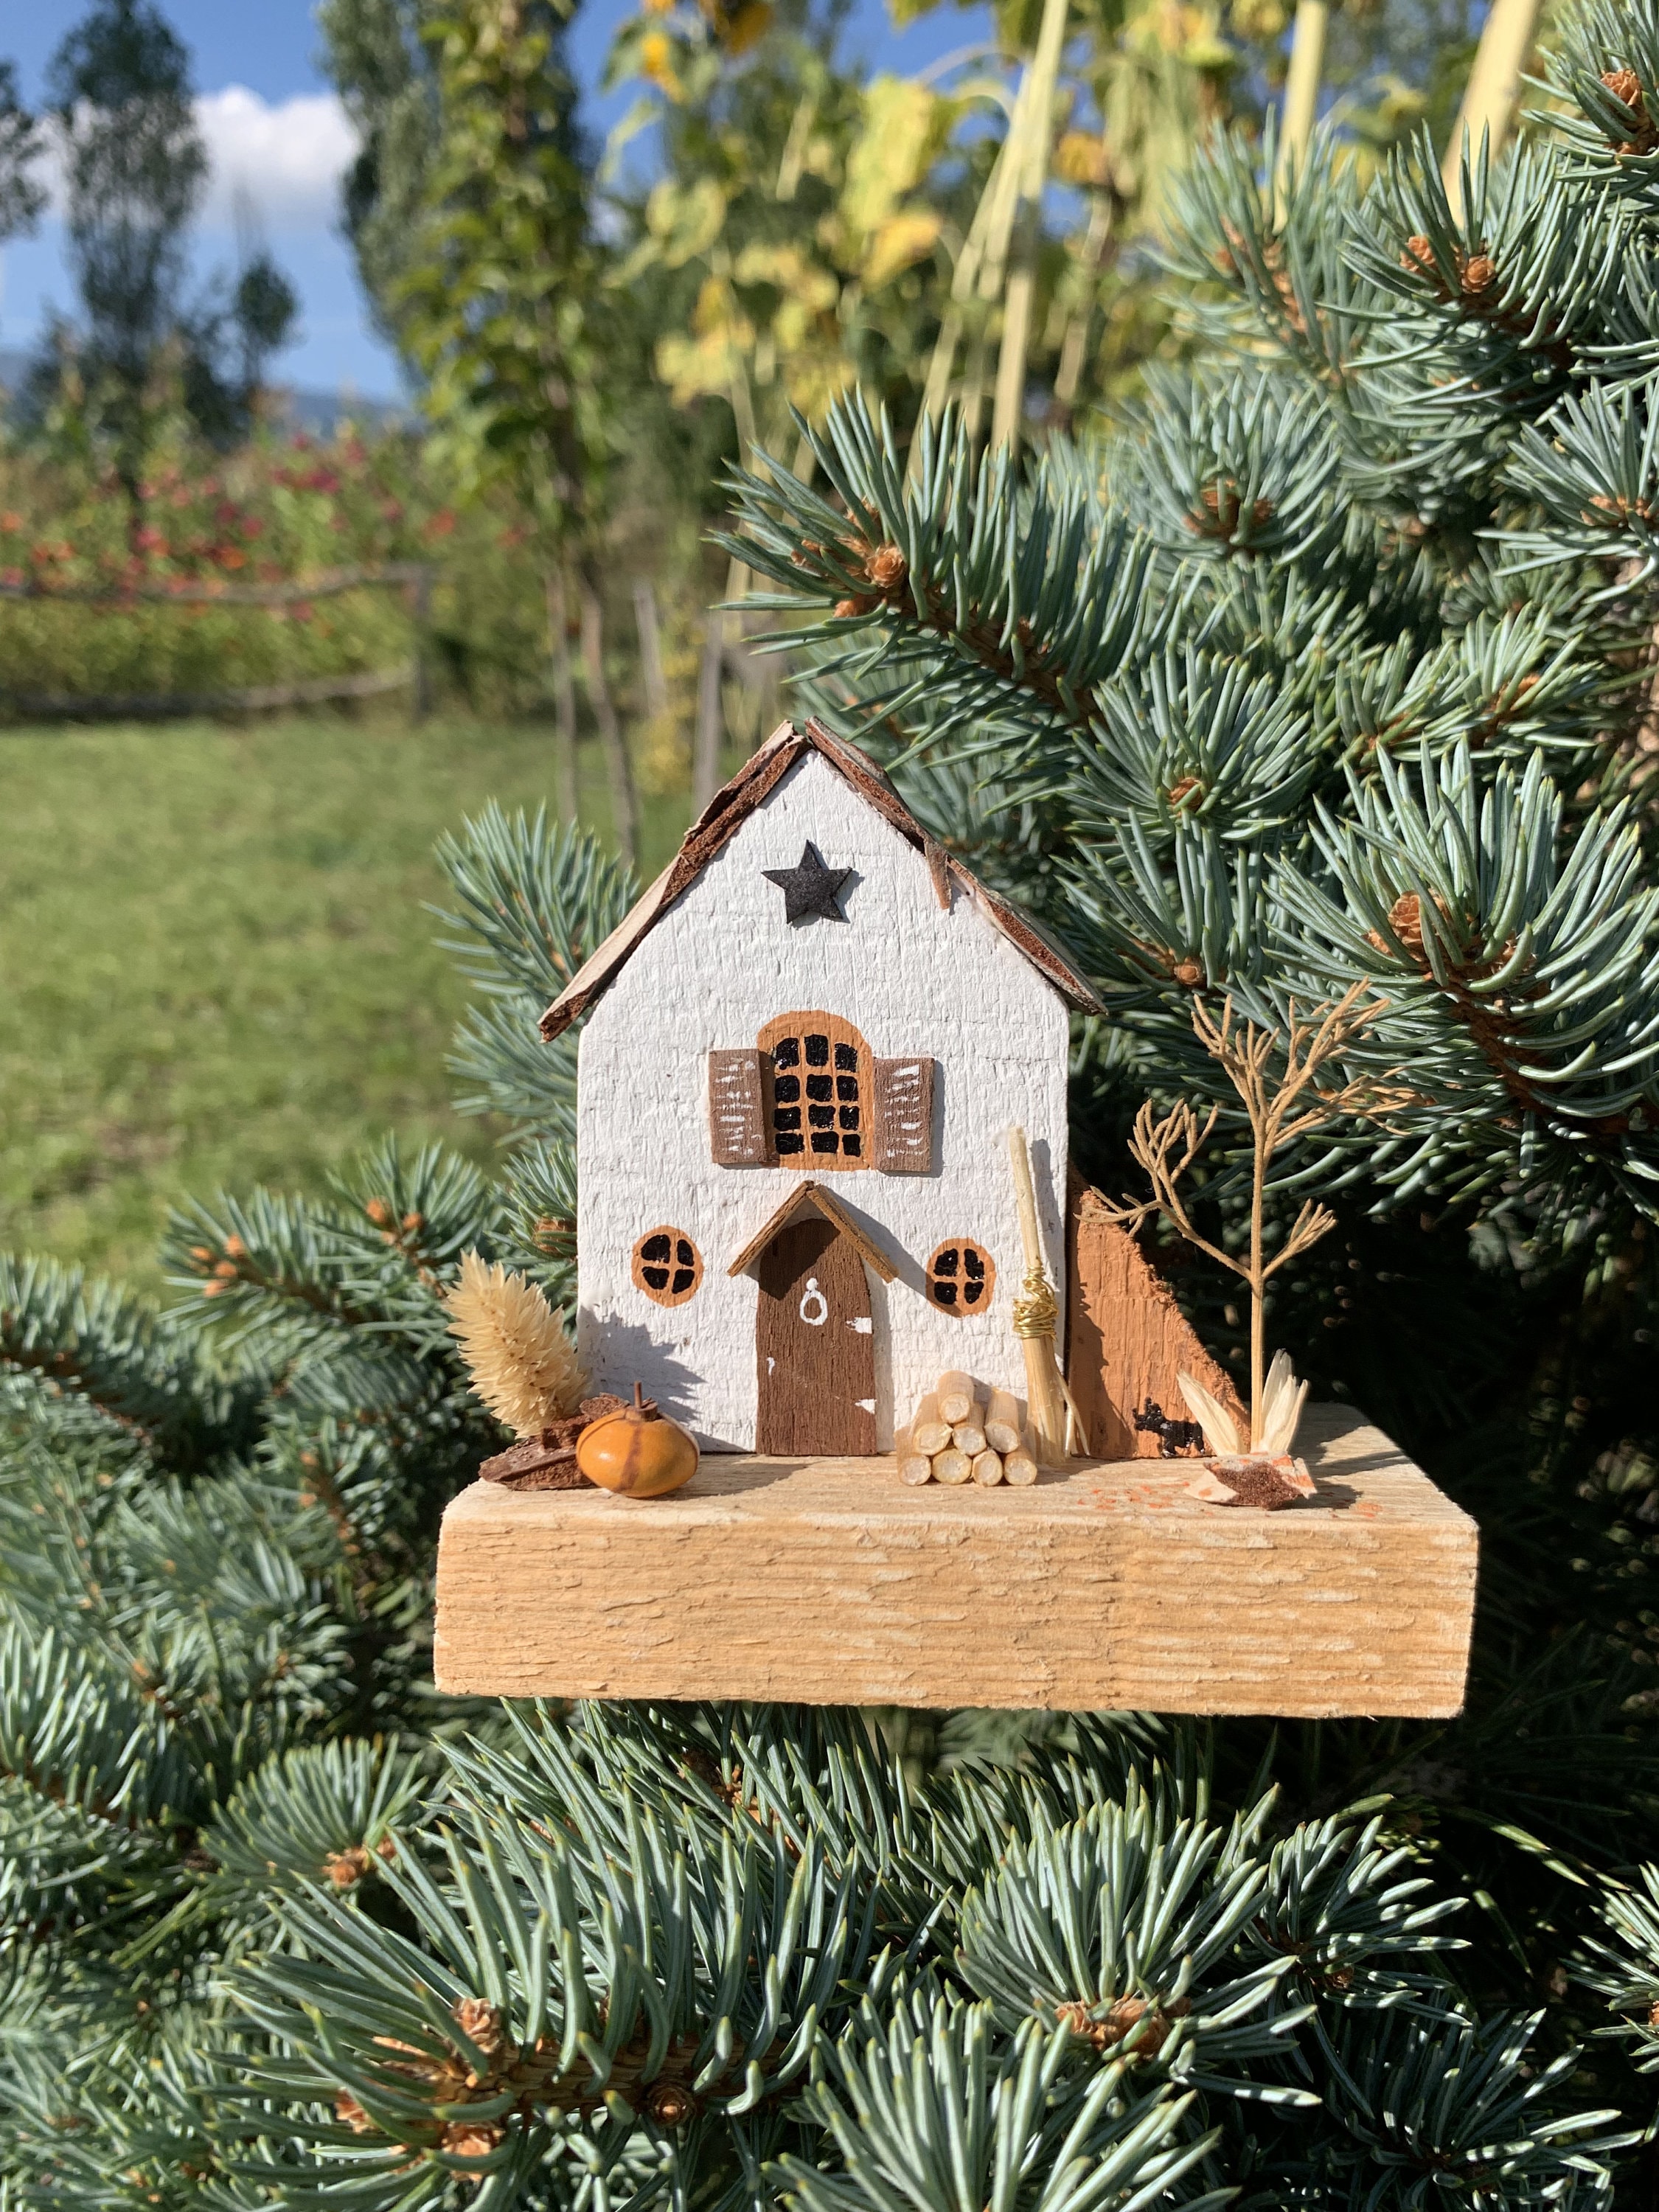 Autumn Driftwood Houses, Little Wooden House, Autumn Decor, Fall Decor,  Autumn Pumpkin Cottage, Driftwood Cottage, New Home Gift, Miniature -   Canada